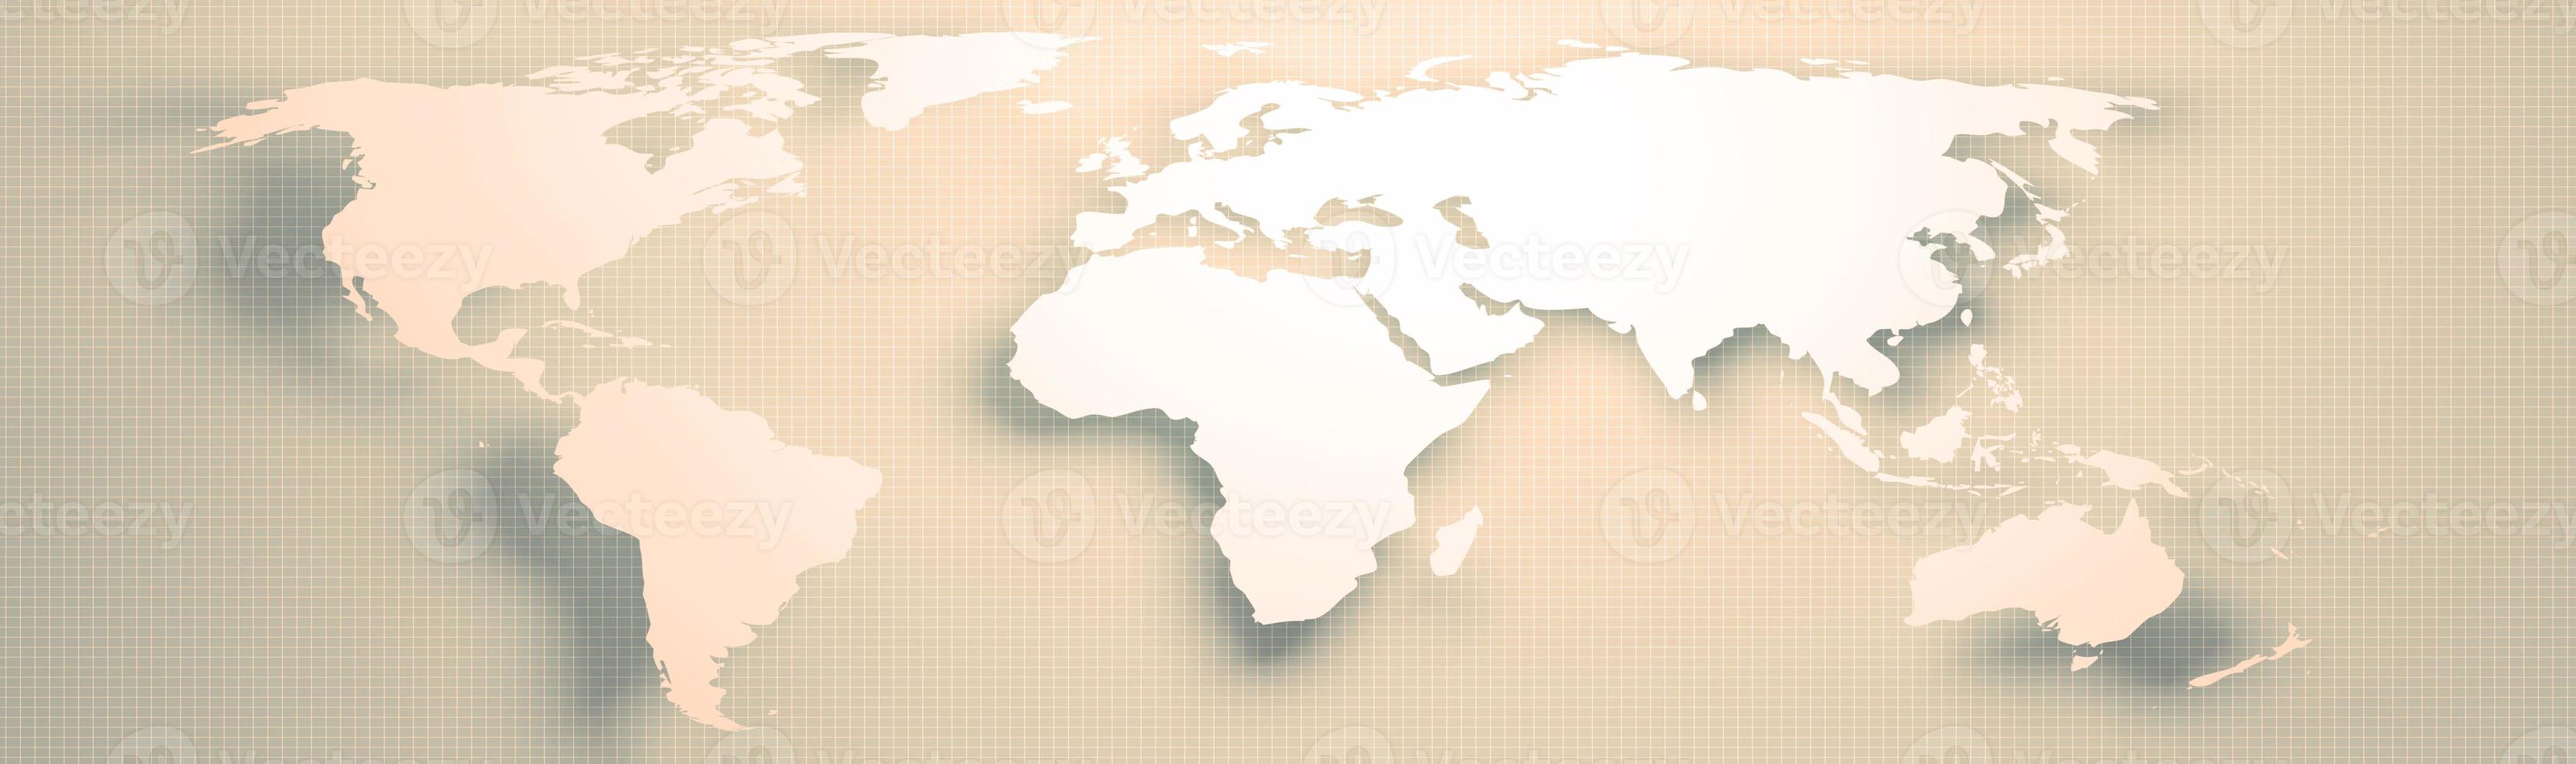 concepto de banner de mapa mundial. mapa plano detallado de los continentes. representación 3d foto